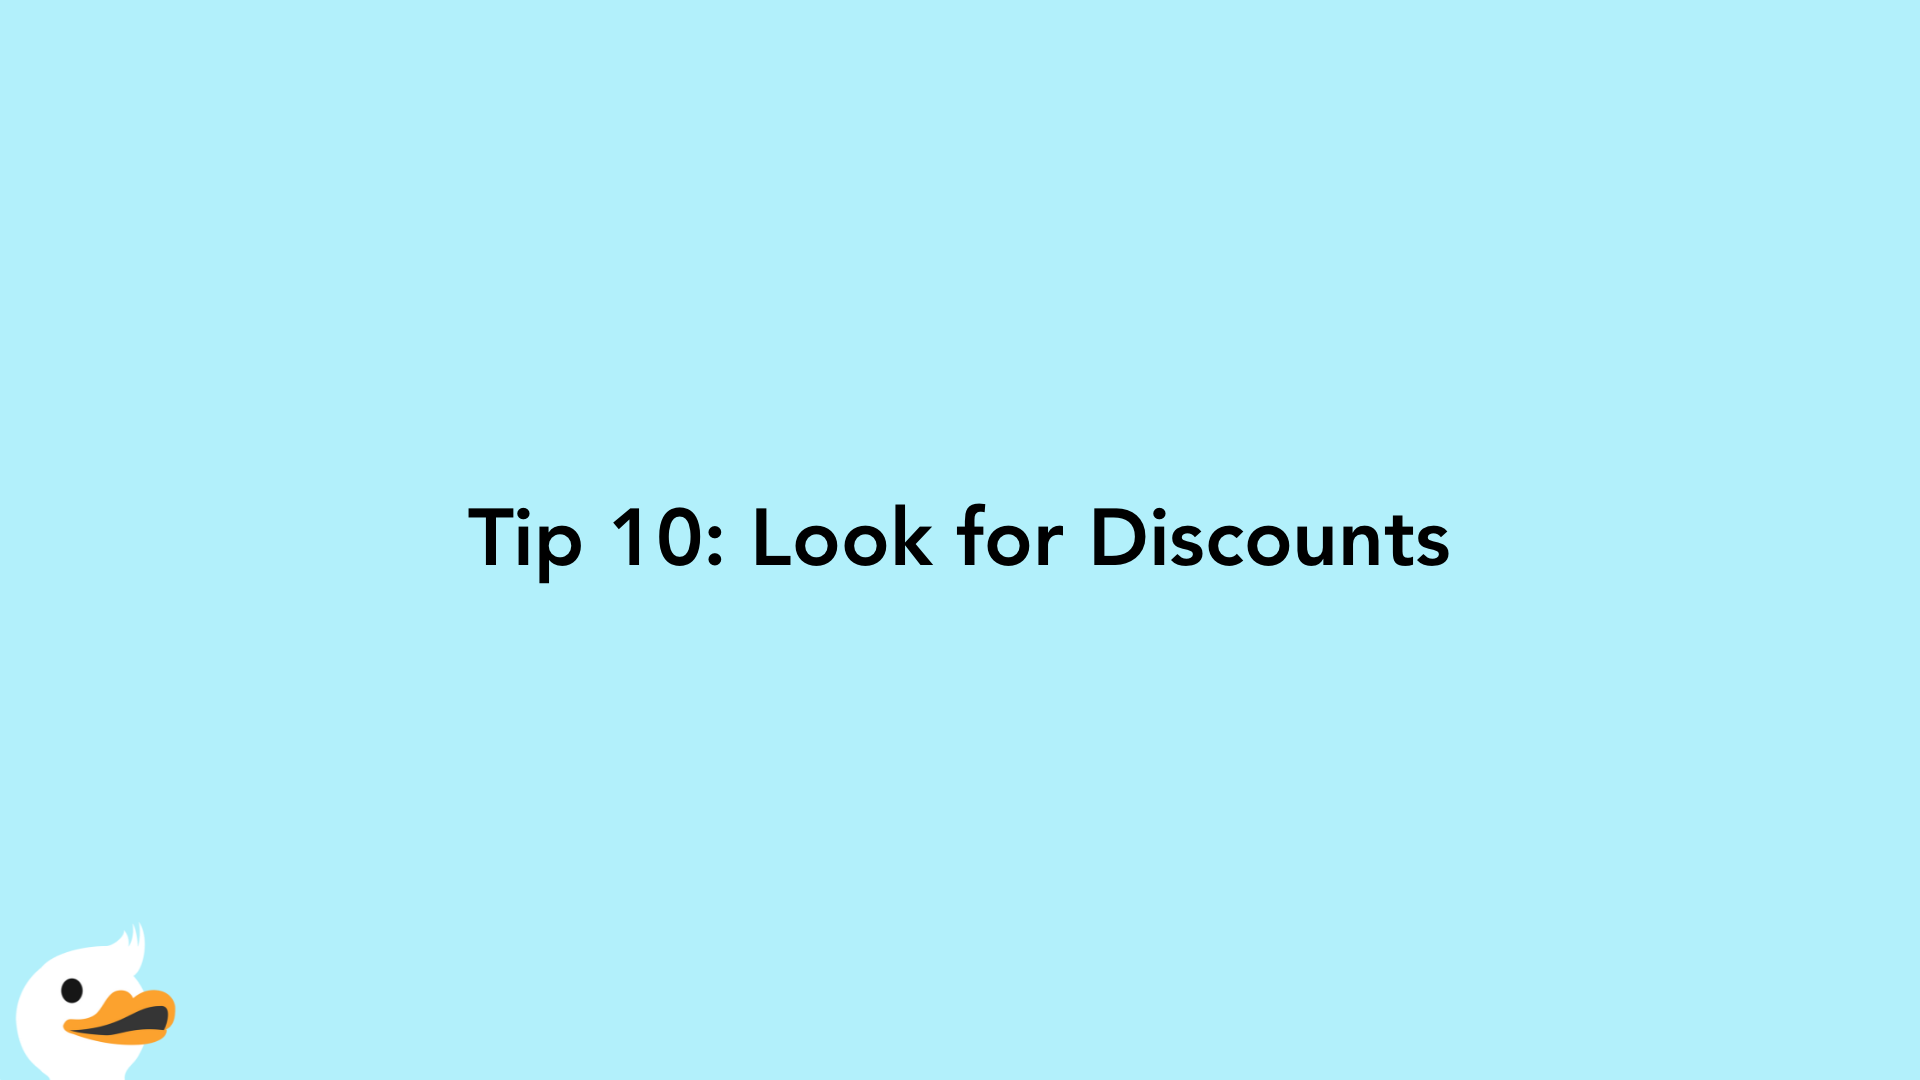 Tip 10: Look for Discounts